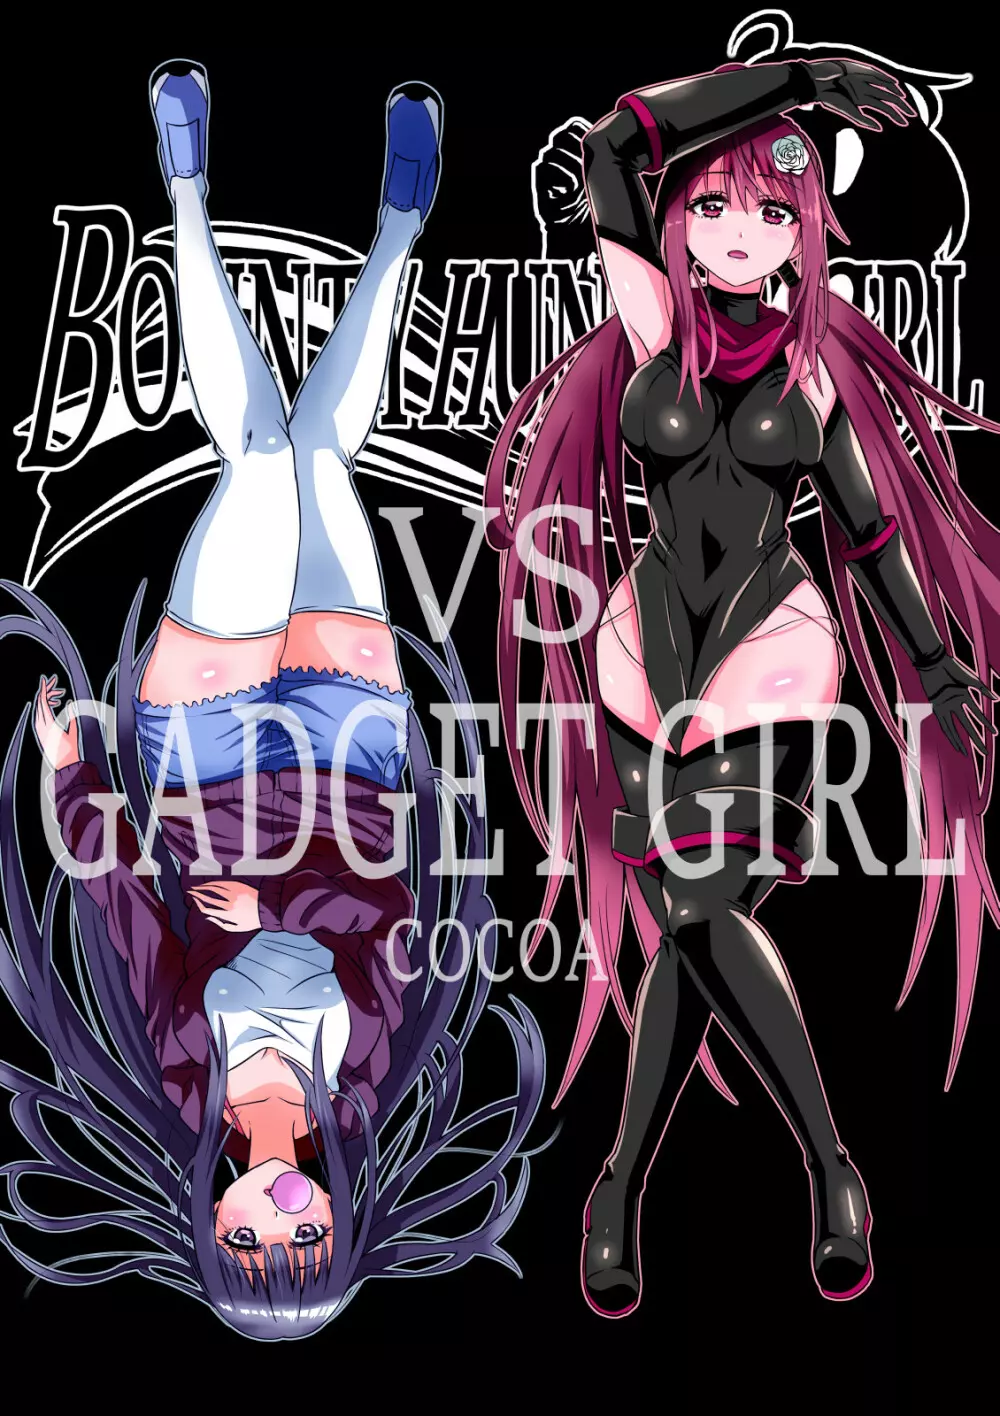 BOUNTY HUNTER GIRL vs GADGET GIRL 第22話 1ページ